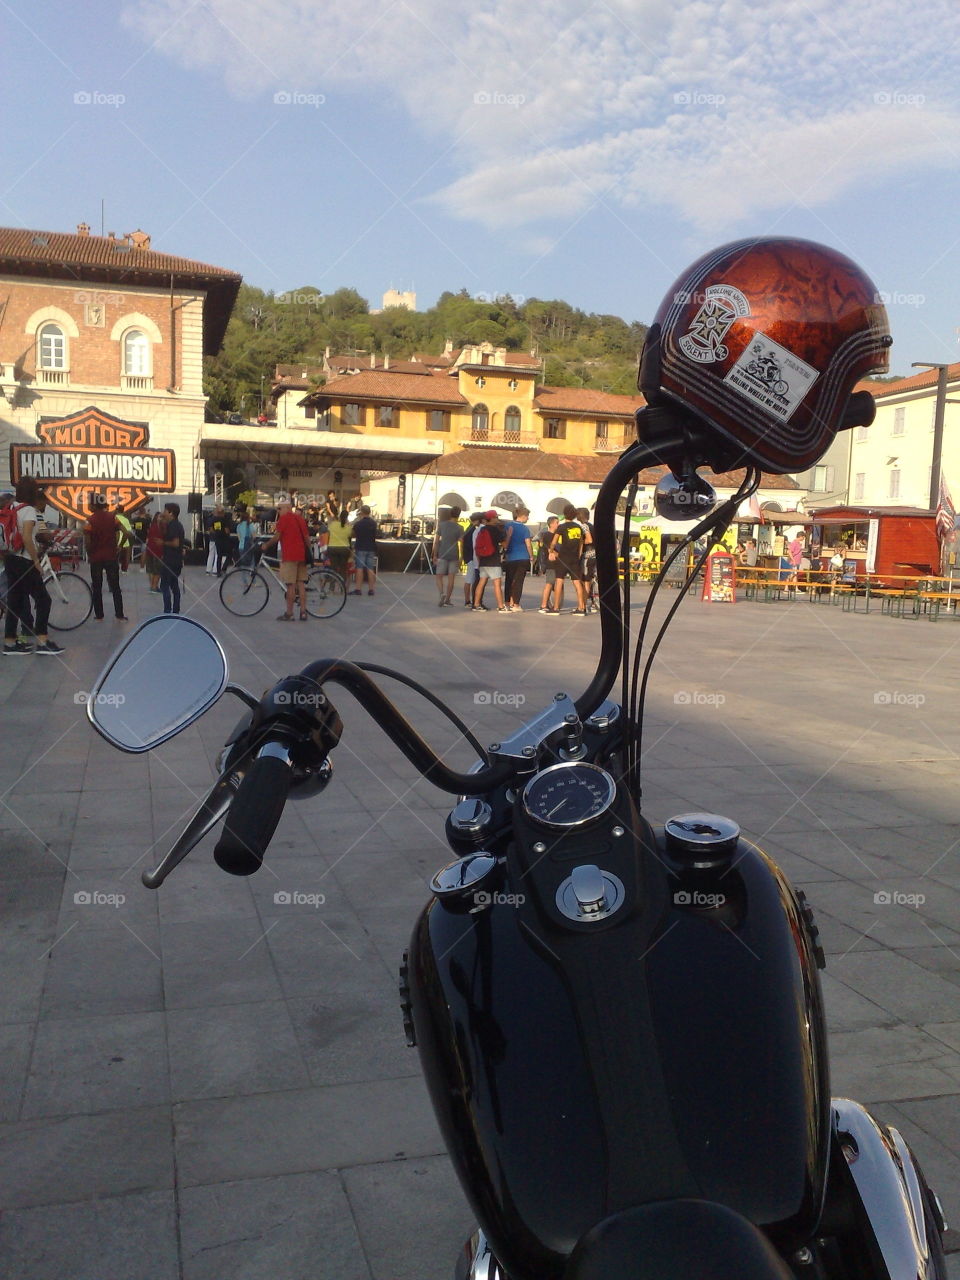 Harley-Davidson festival motor show italy 1